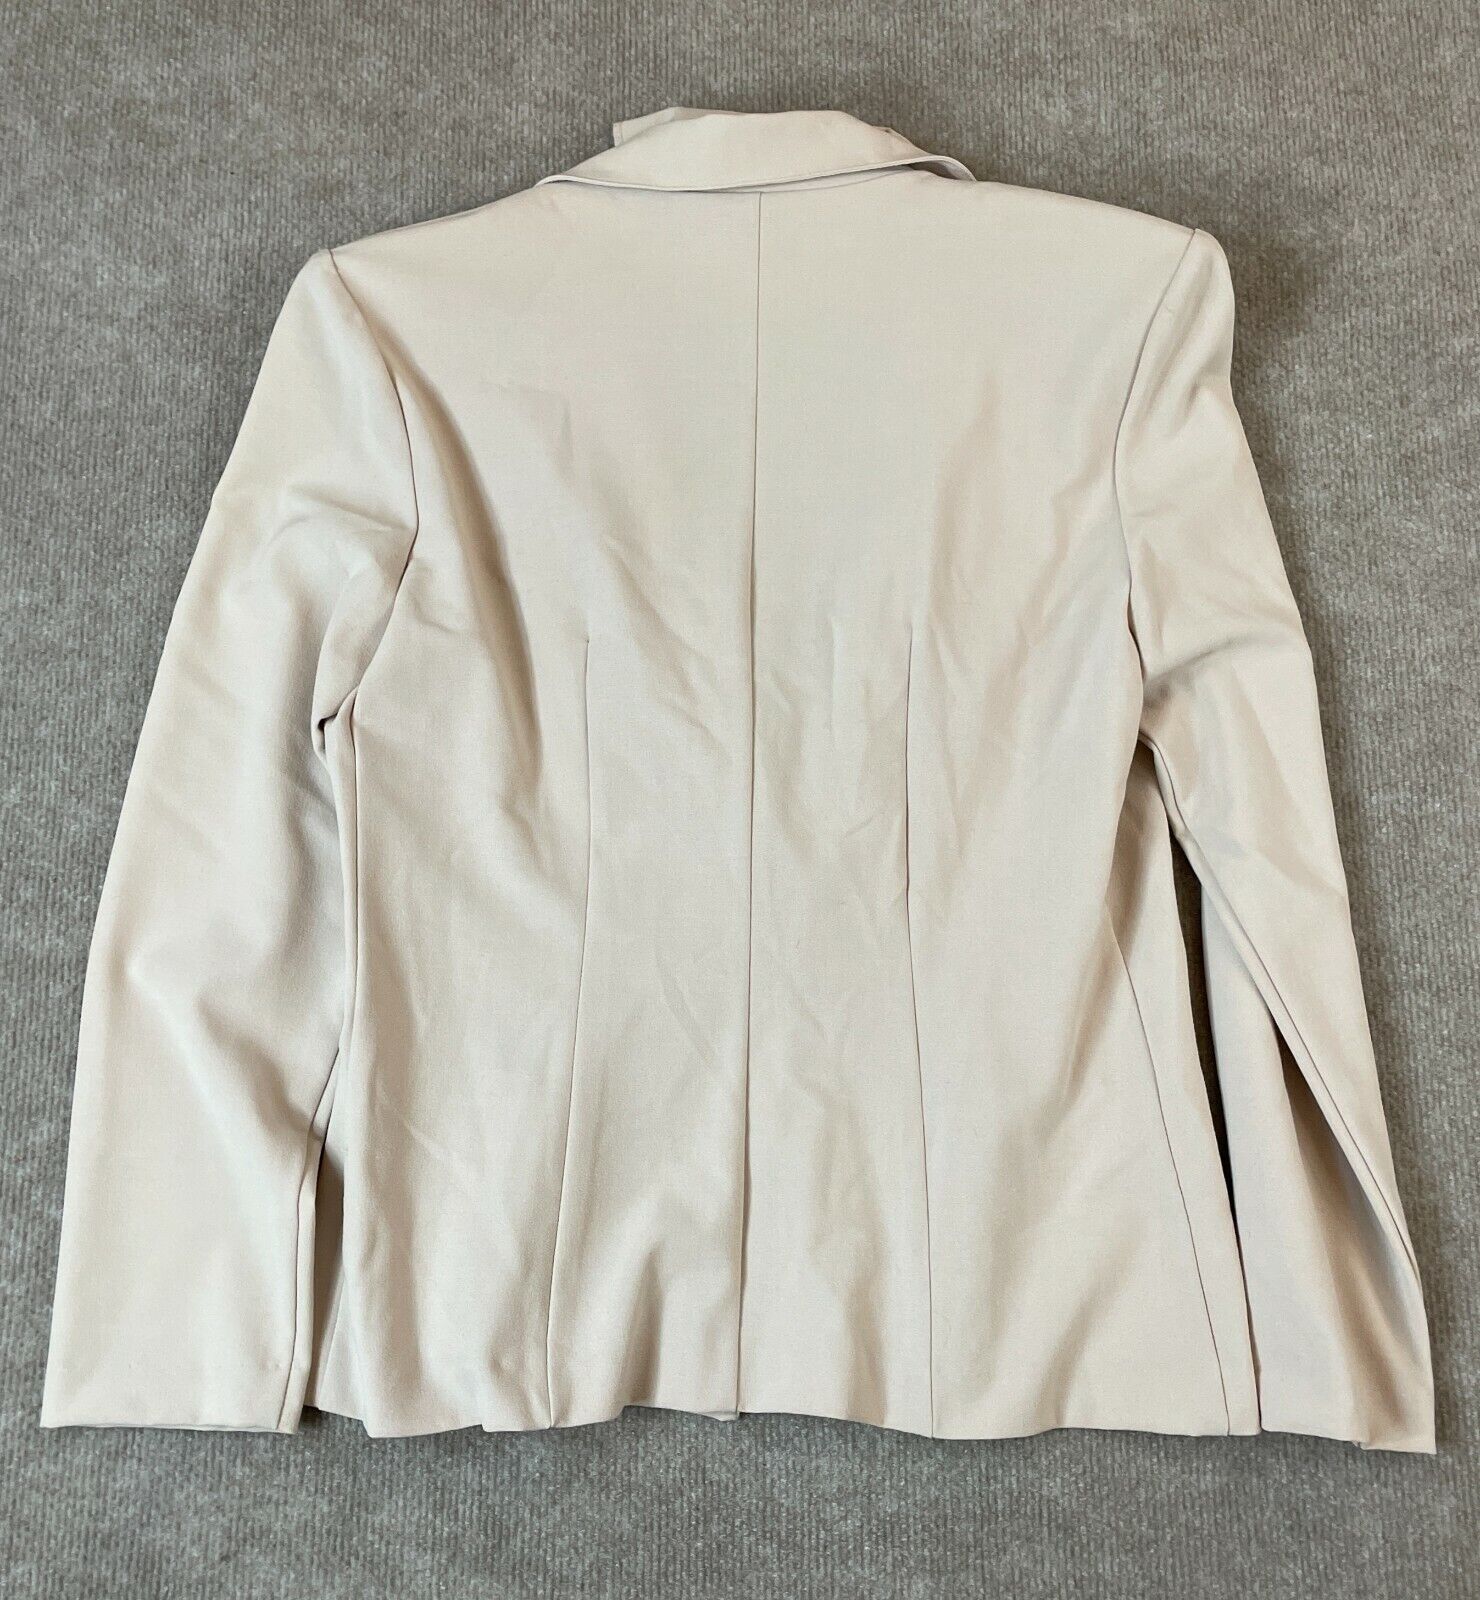 Courtenay Women's Sz 6 Tan Suit Jacket Sports Coat - image 2